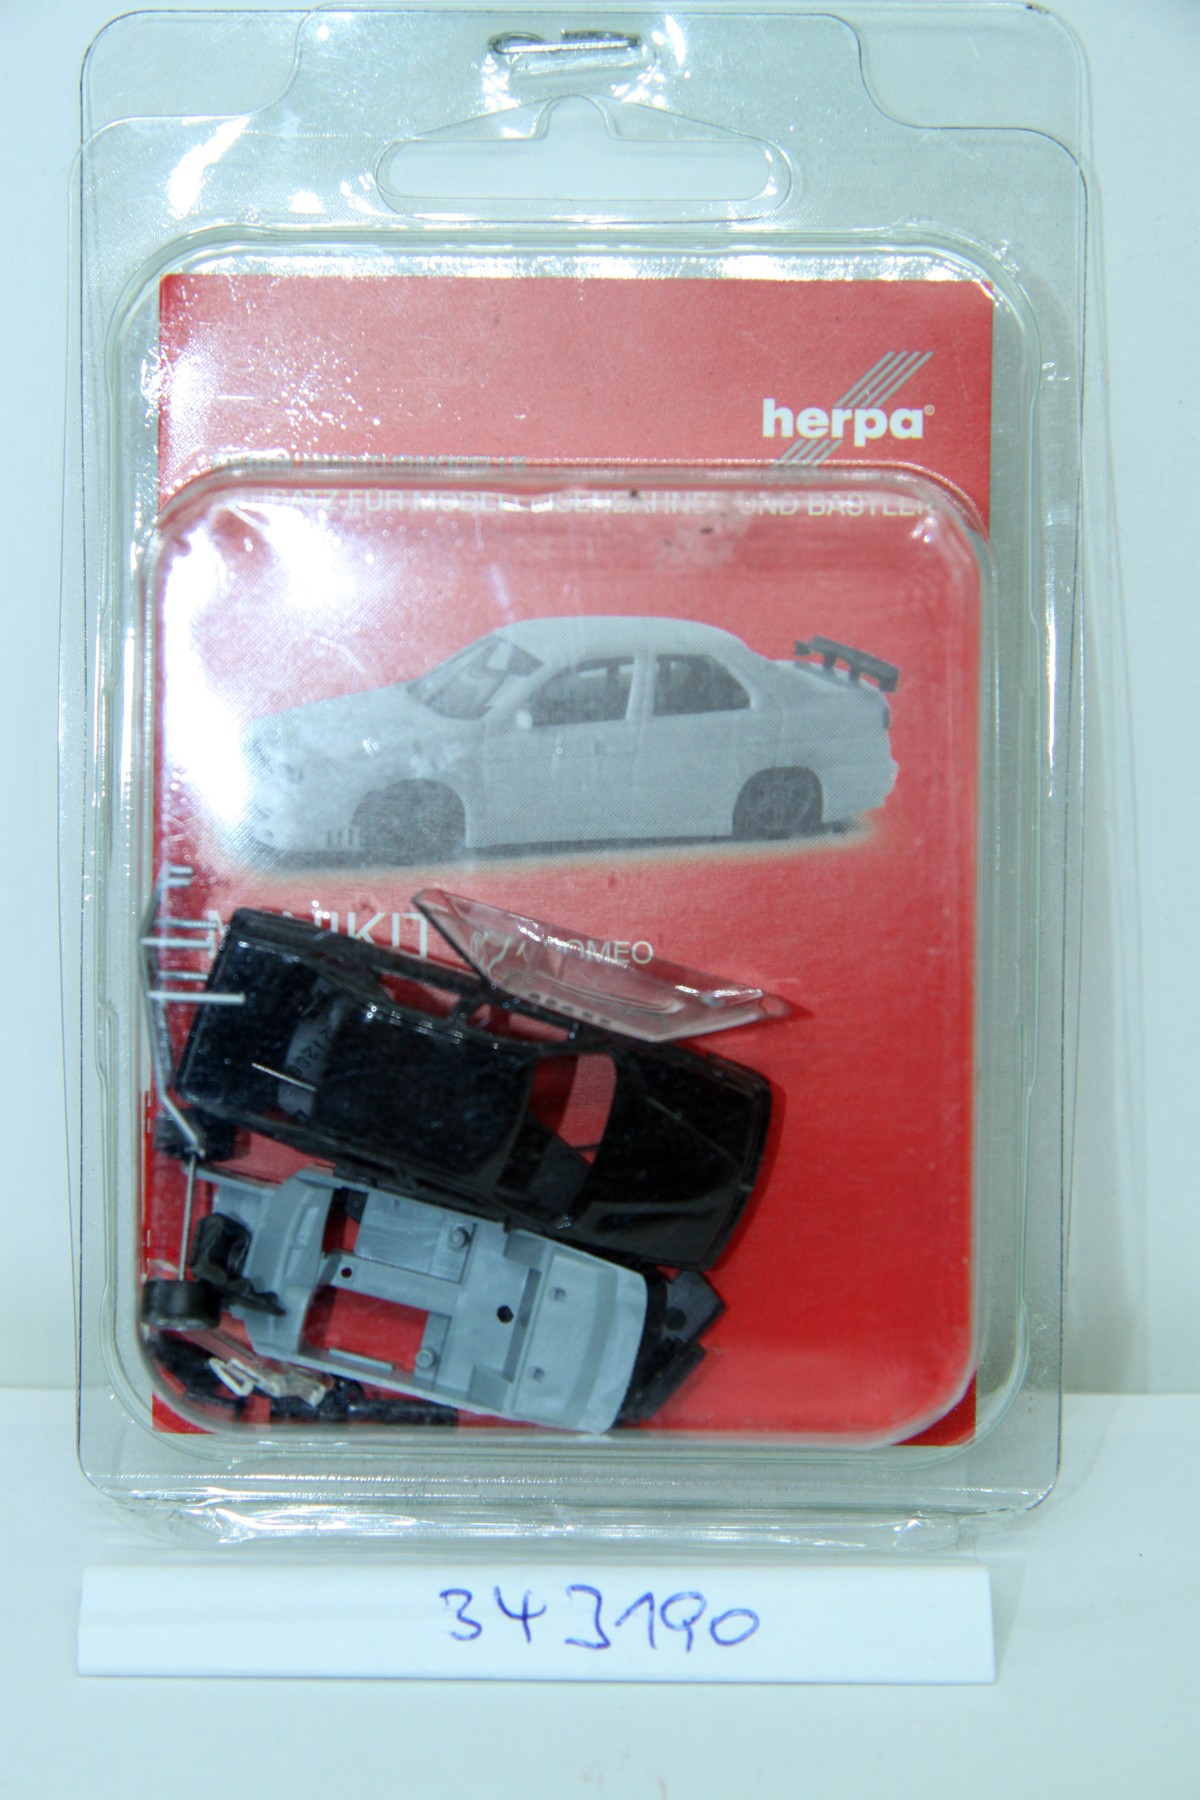 Herpa 012393, Minikit Opel Vectra racing, black for H0 gauge,